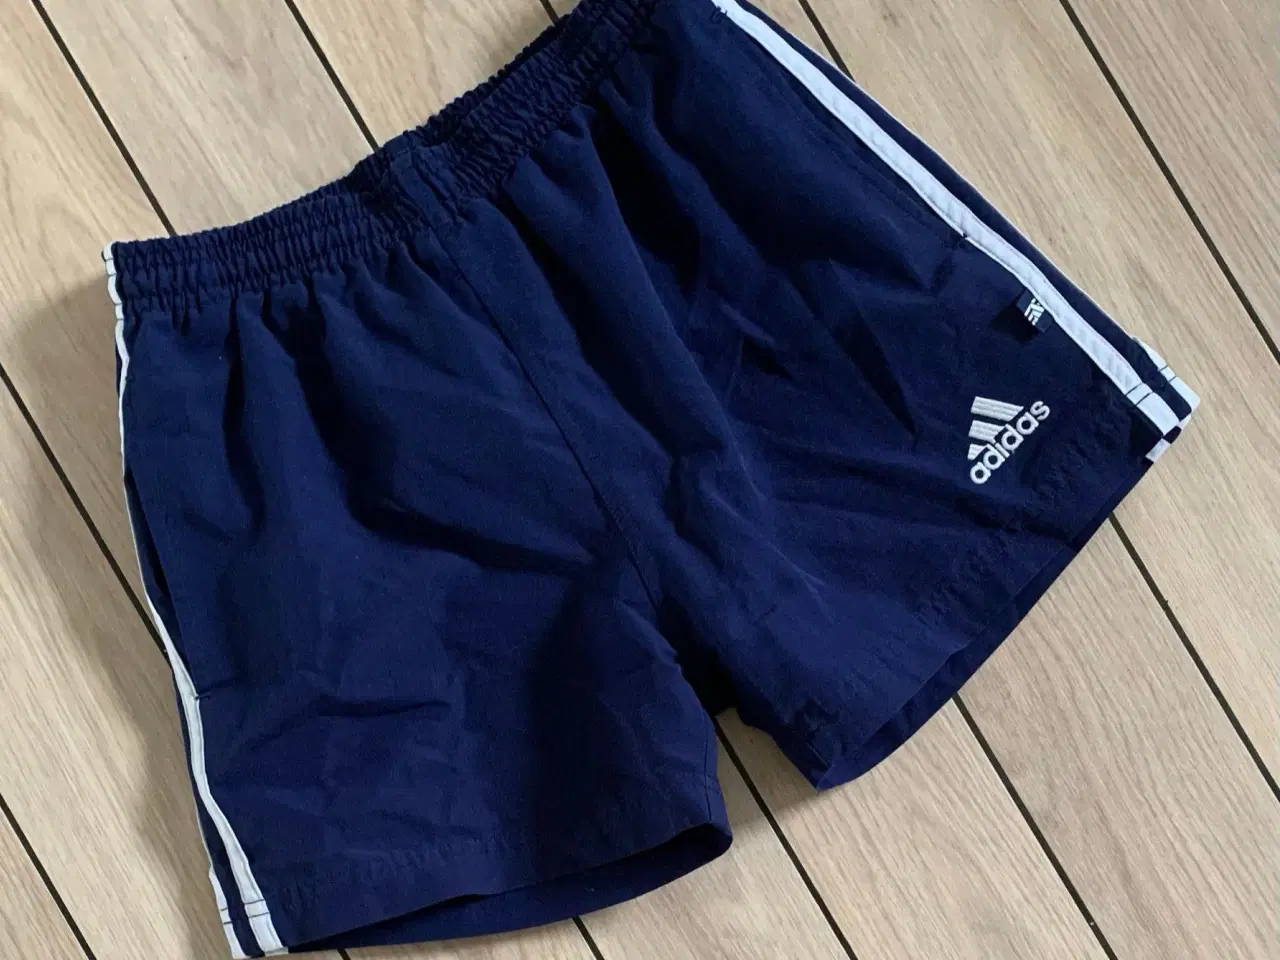 Billede 5 - Adidas shorts str. 140 i navy Adidas 3 stripes